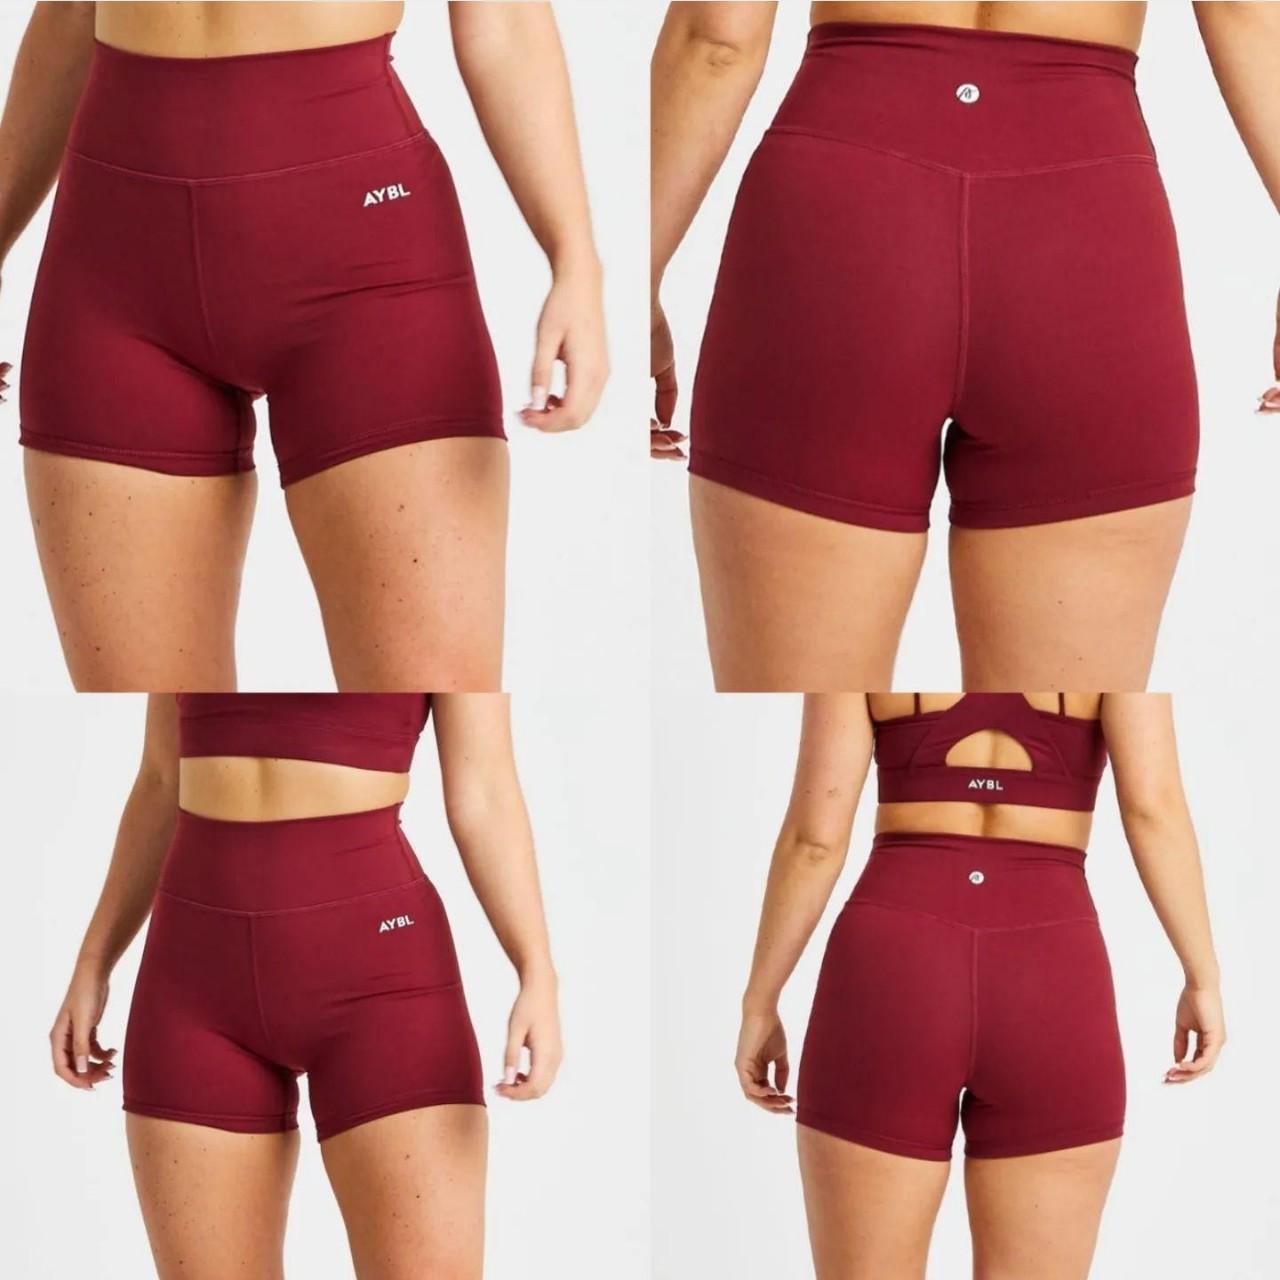 Aybl Core Shorts